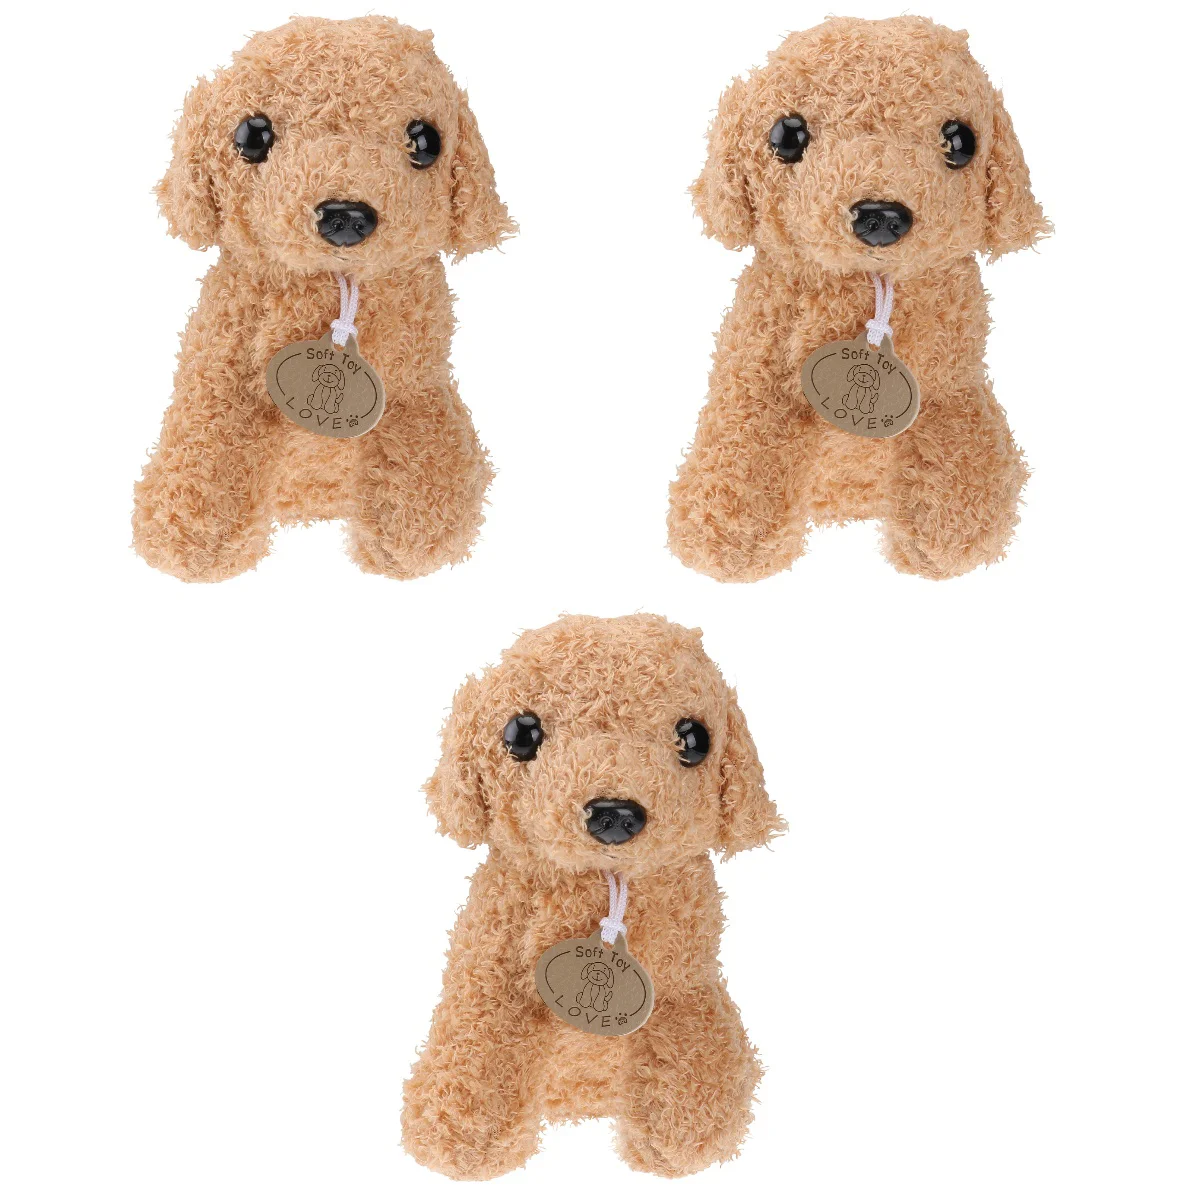 

3pcs Bed Time Stuffed Animal Plush Poodle Dog Figure(Brown, Random Tags)